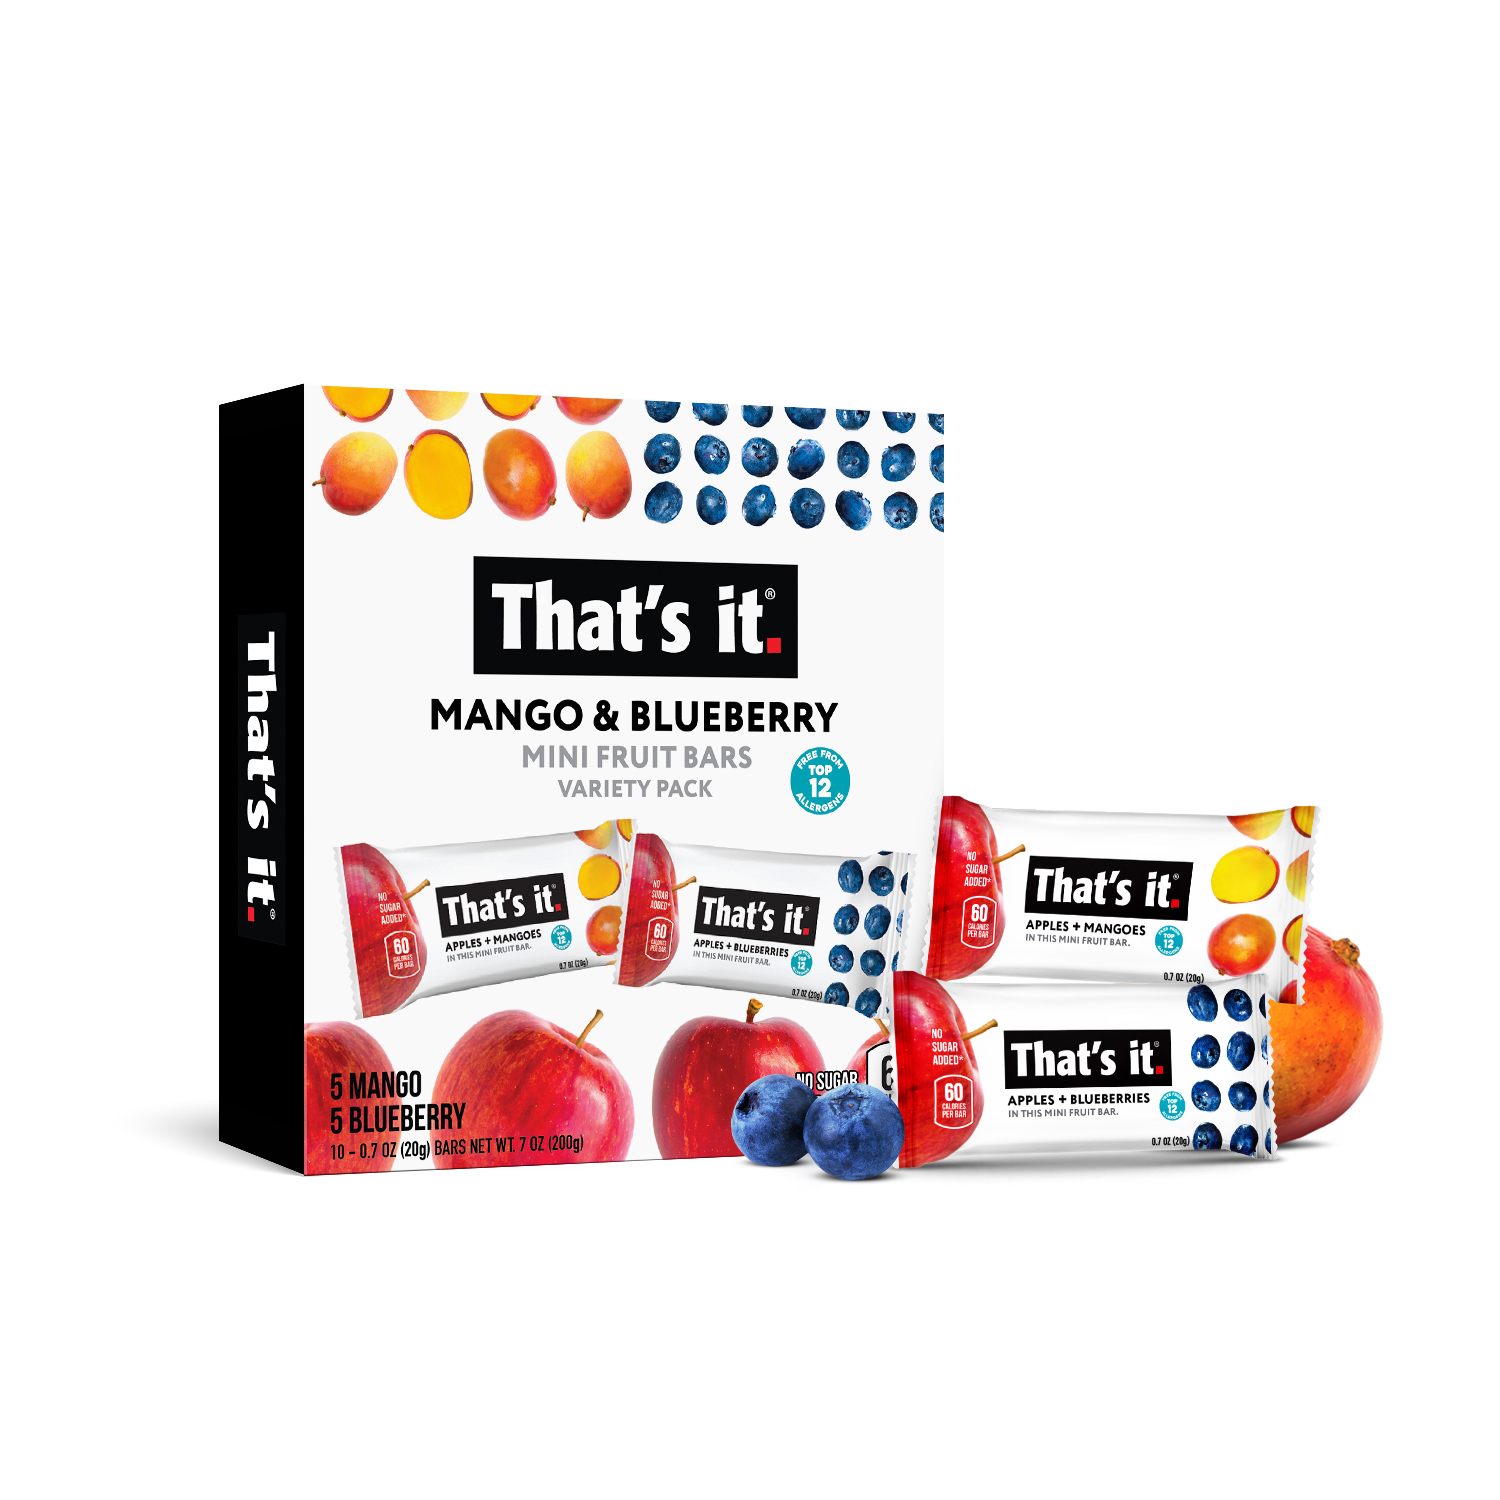 That's It Mango & Blueberry Mini Fruit Bars Variety Pack 6 innerpacks per case 7.0 oz